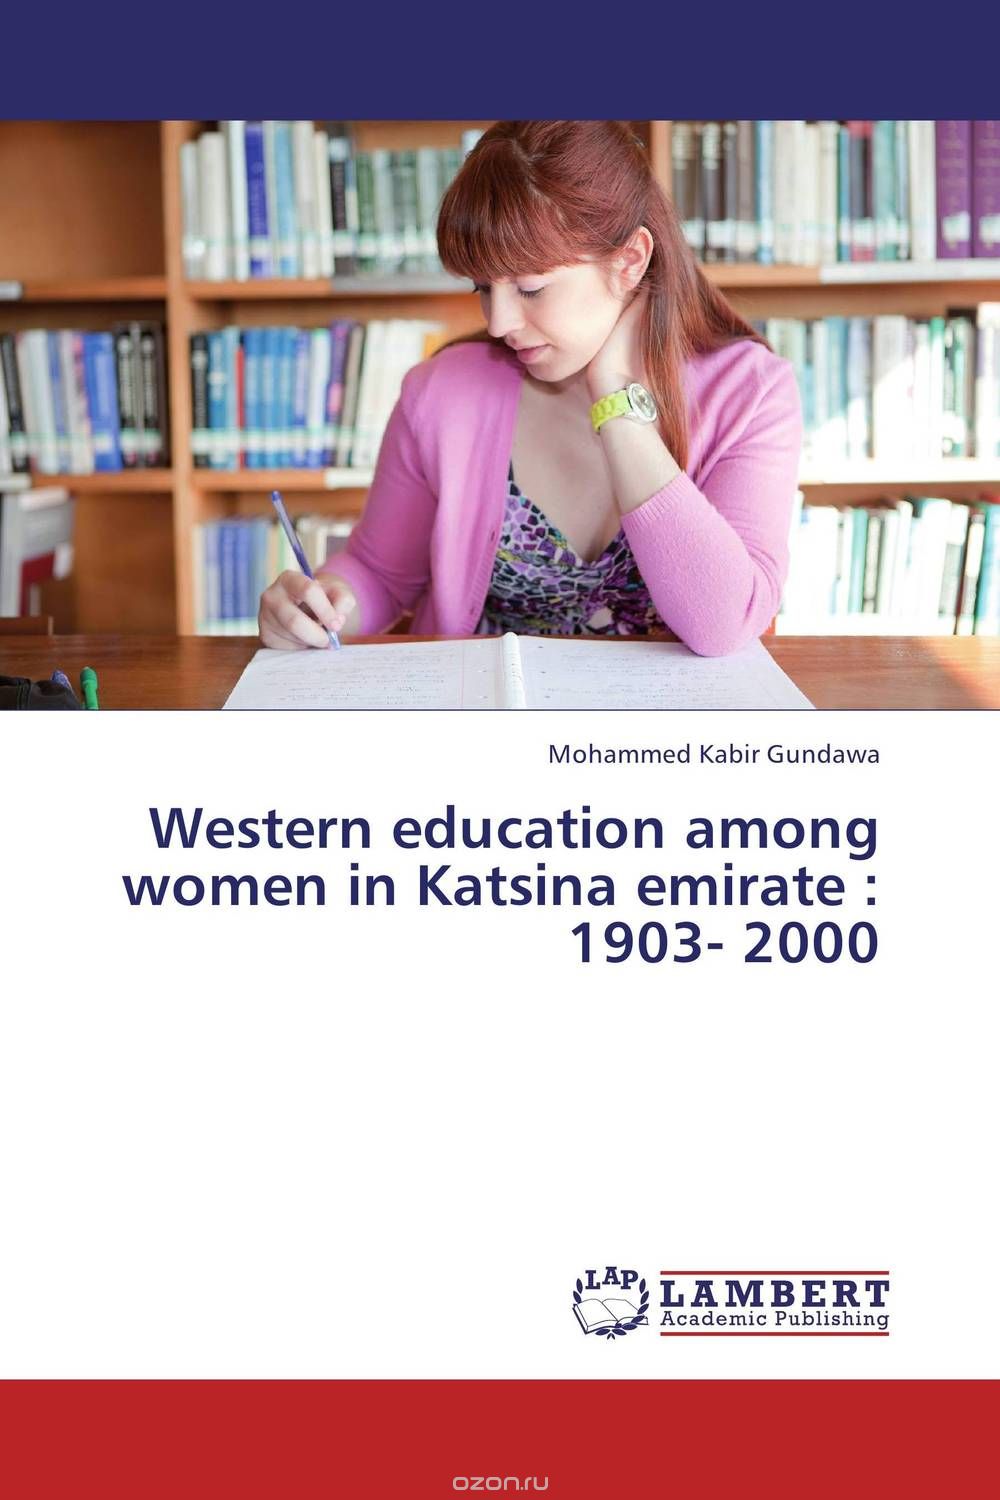 Скачать книгу "Western education among women in  Katsina emirate : 1903- 2000"